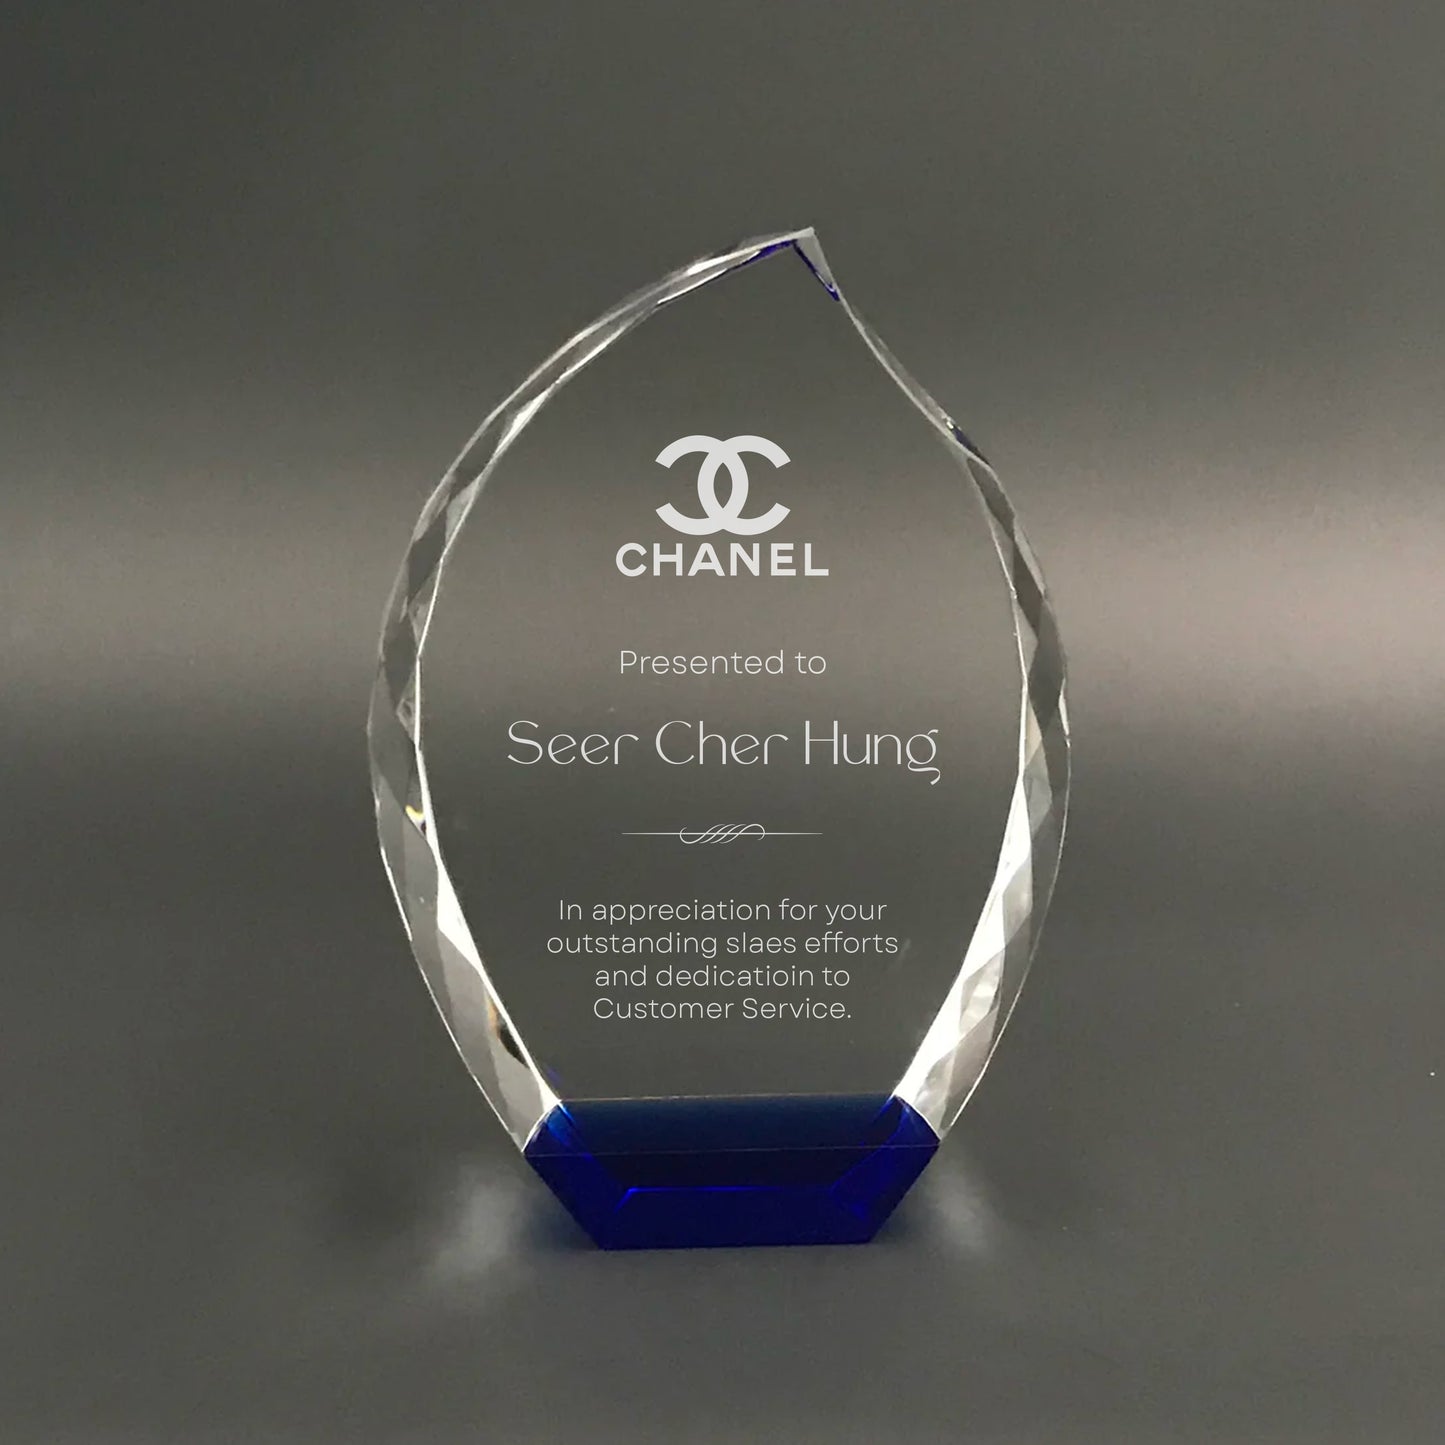 Jeweled Flame Crystal Award with Blue Base